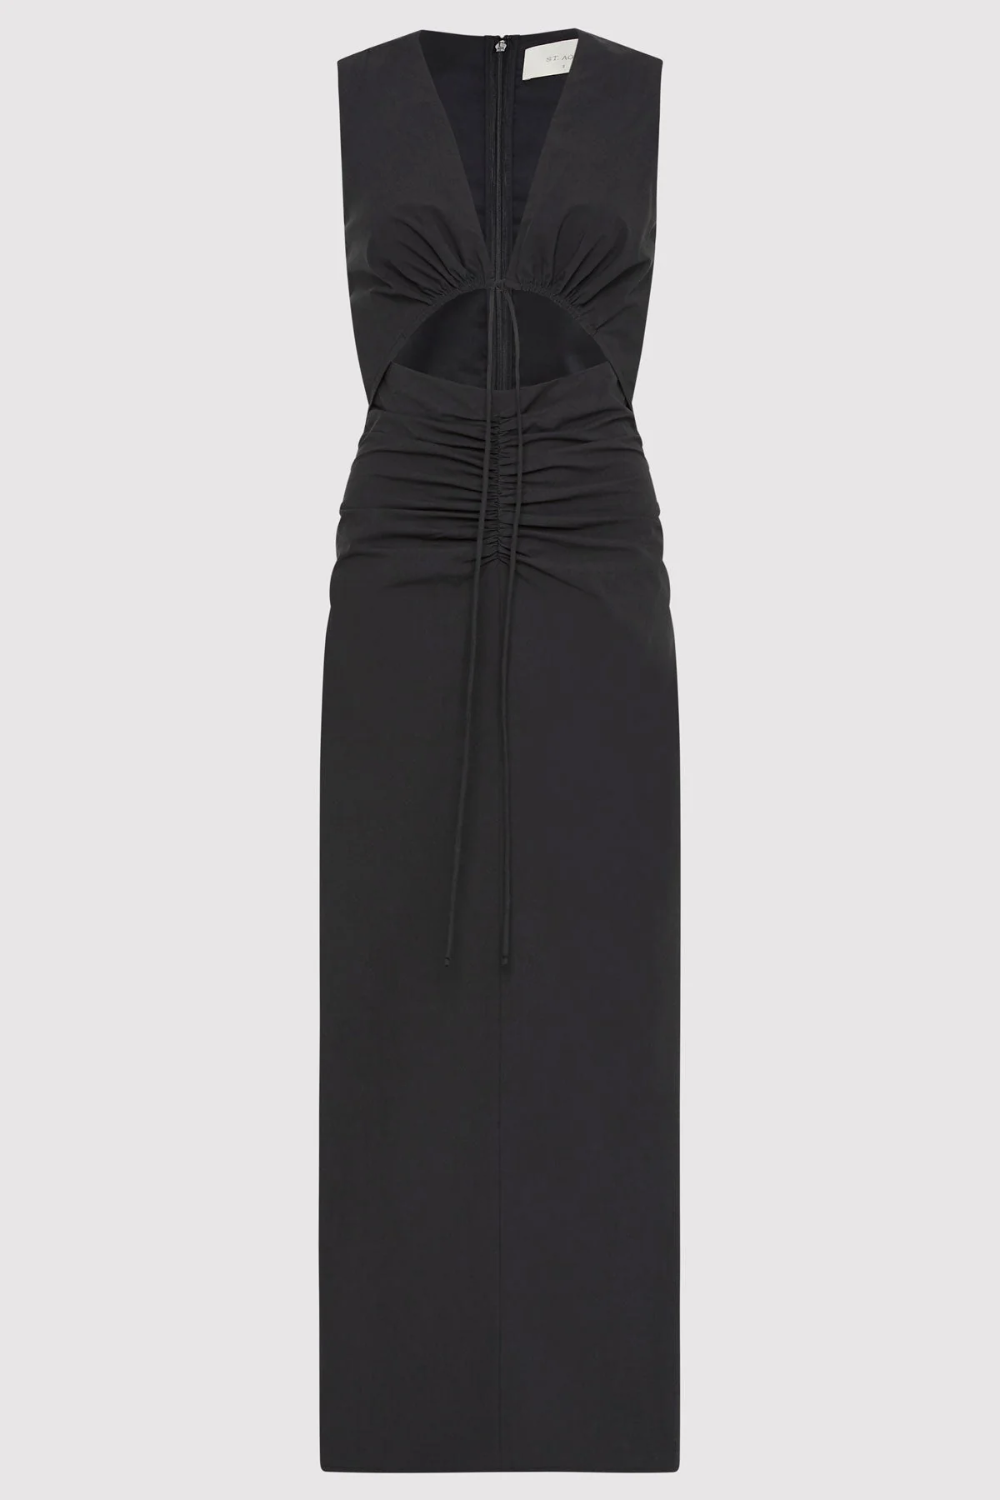 St-Agni-Black-Dress